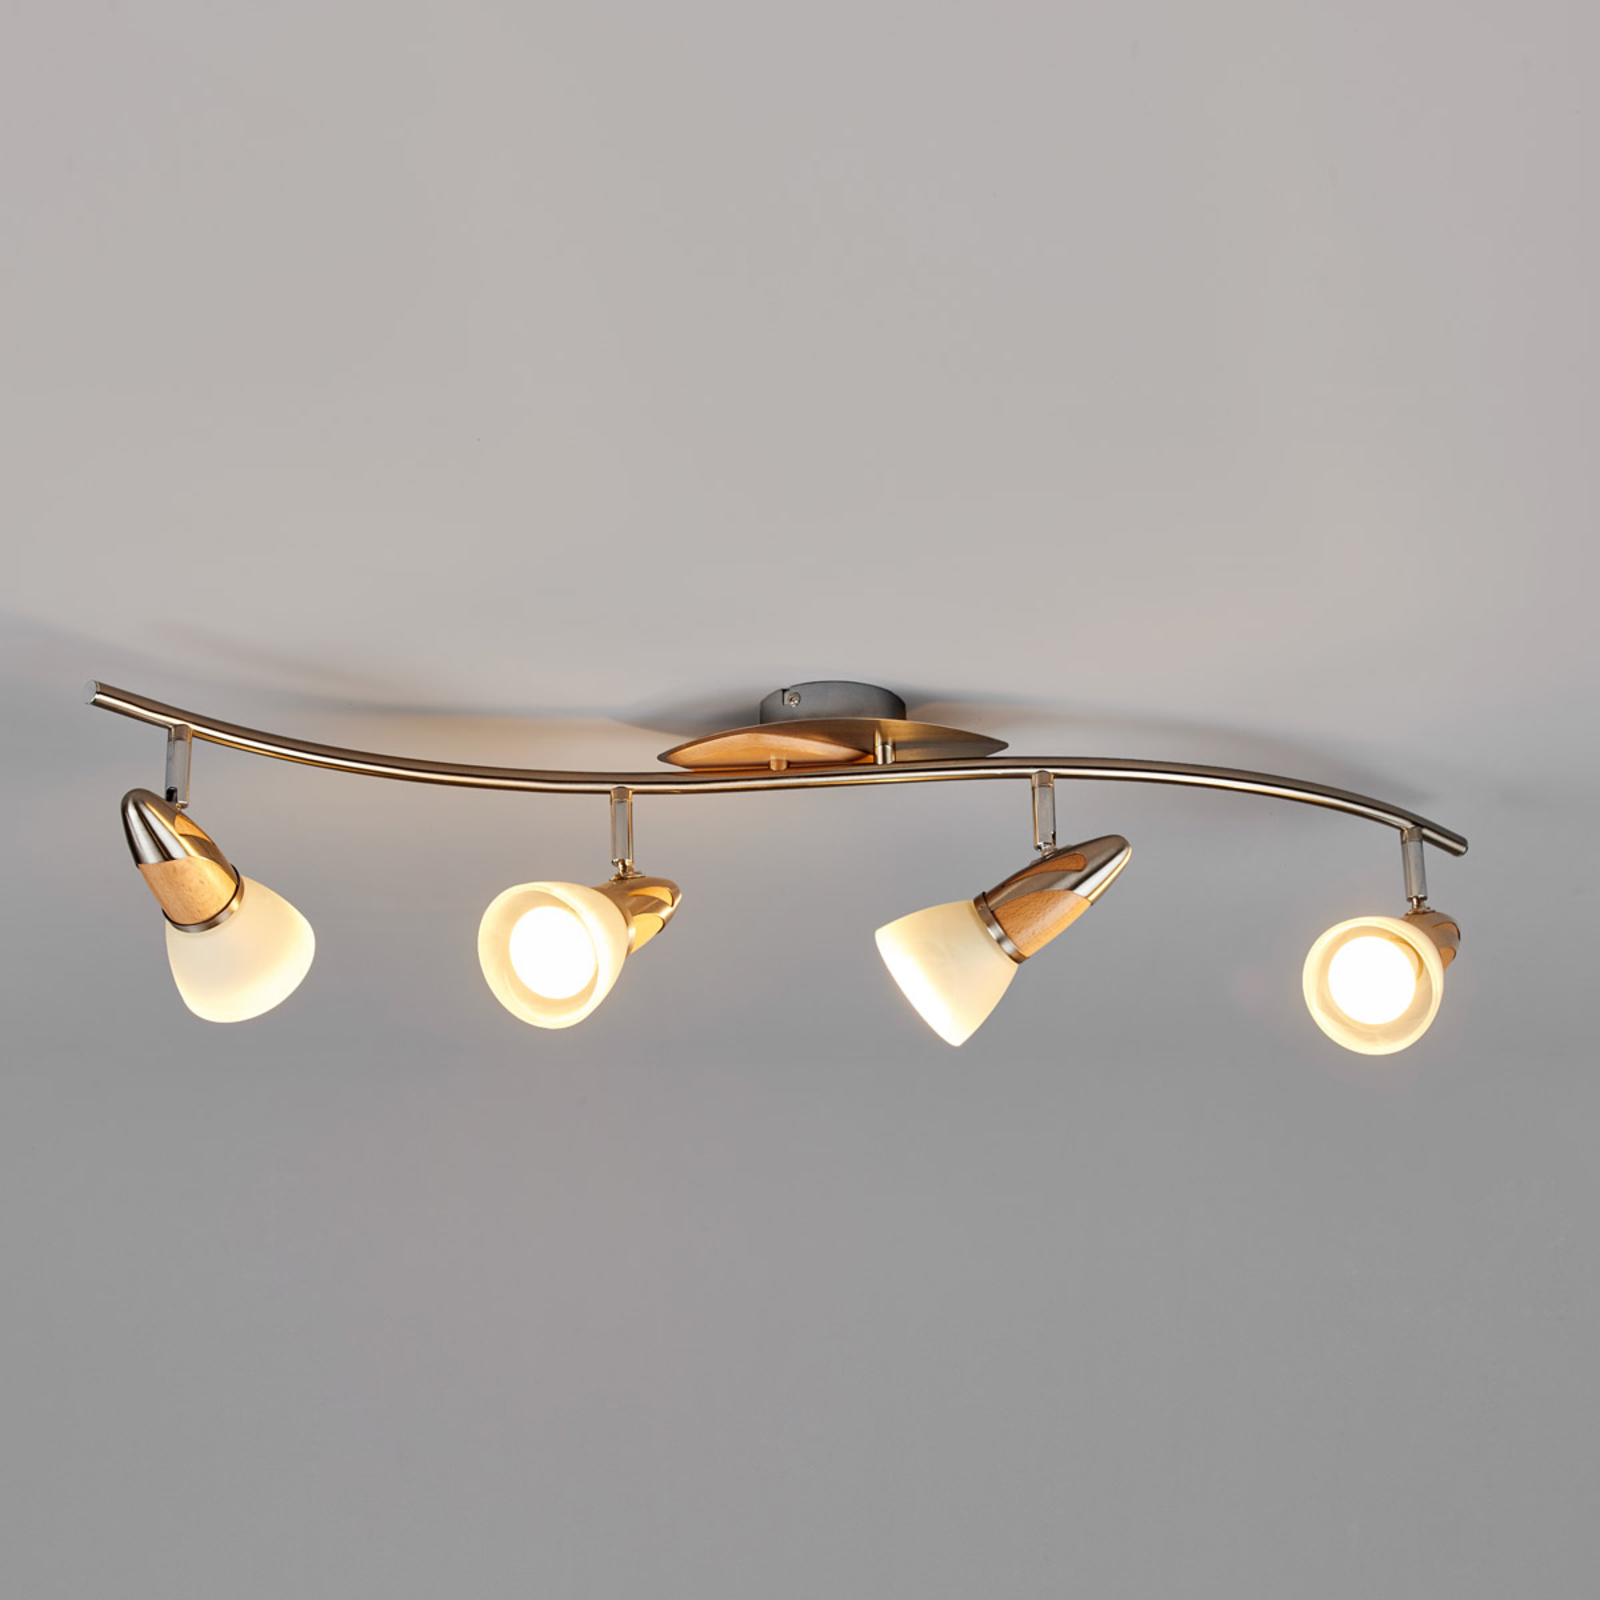 Lindby Marena ceiling light, 4-bulb, glass, wood, 83 cm long